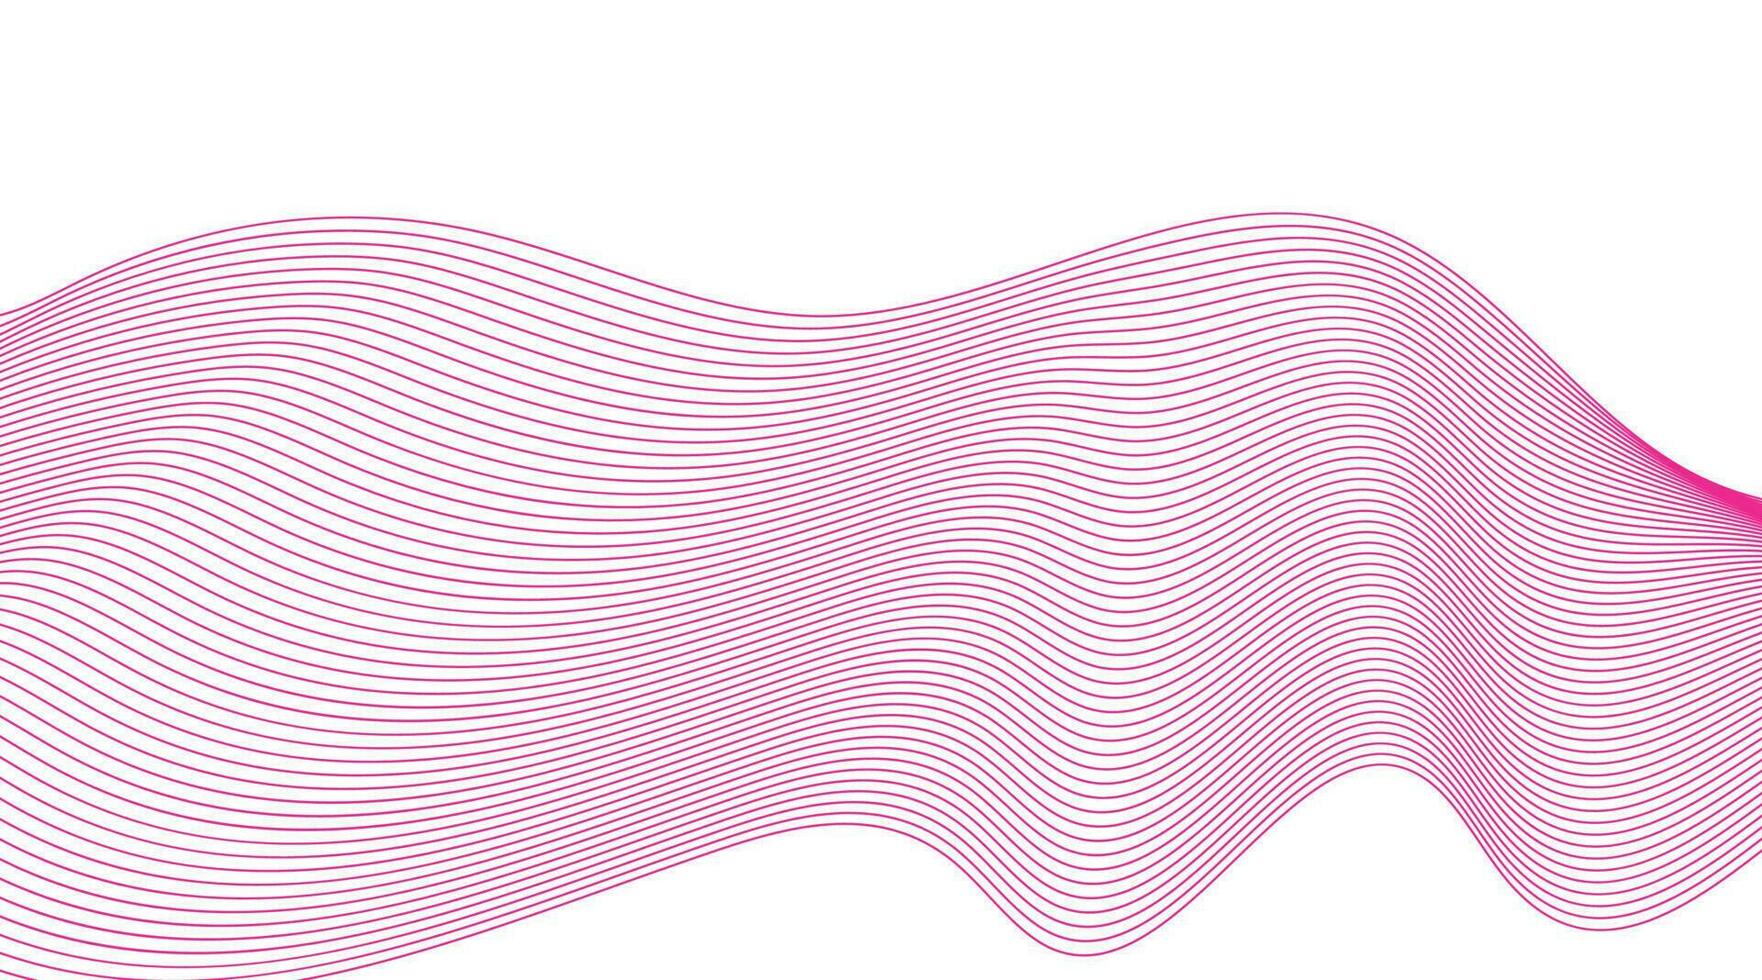 abstract golvend achtergrond. dun lijn golvend abstract vector achtergrond. kromme Golf naadloos patroon. lijn kunst gestreept grafisch sjabloon